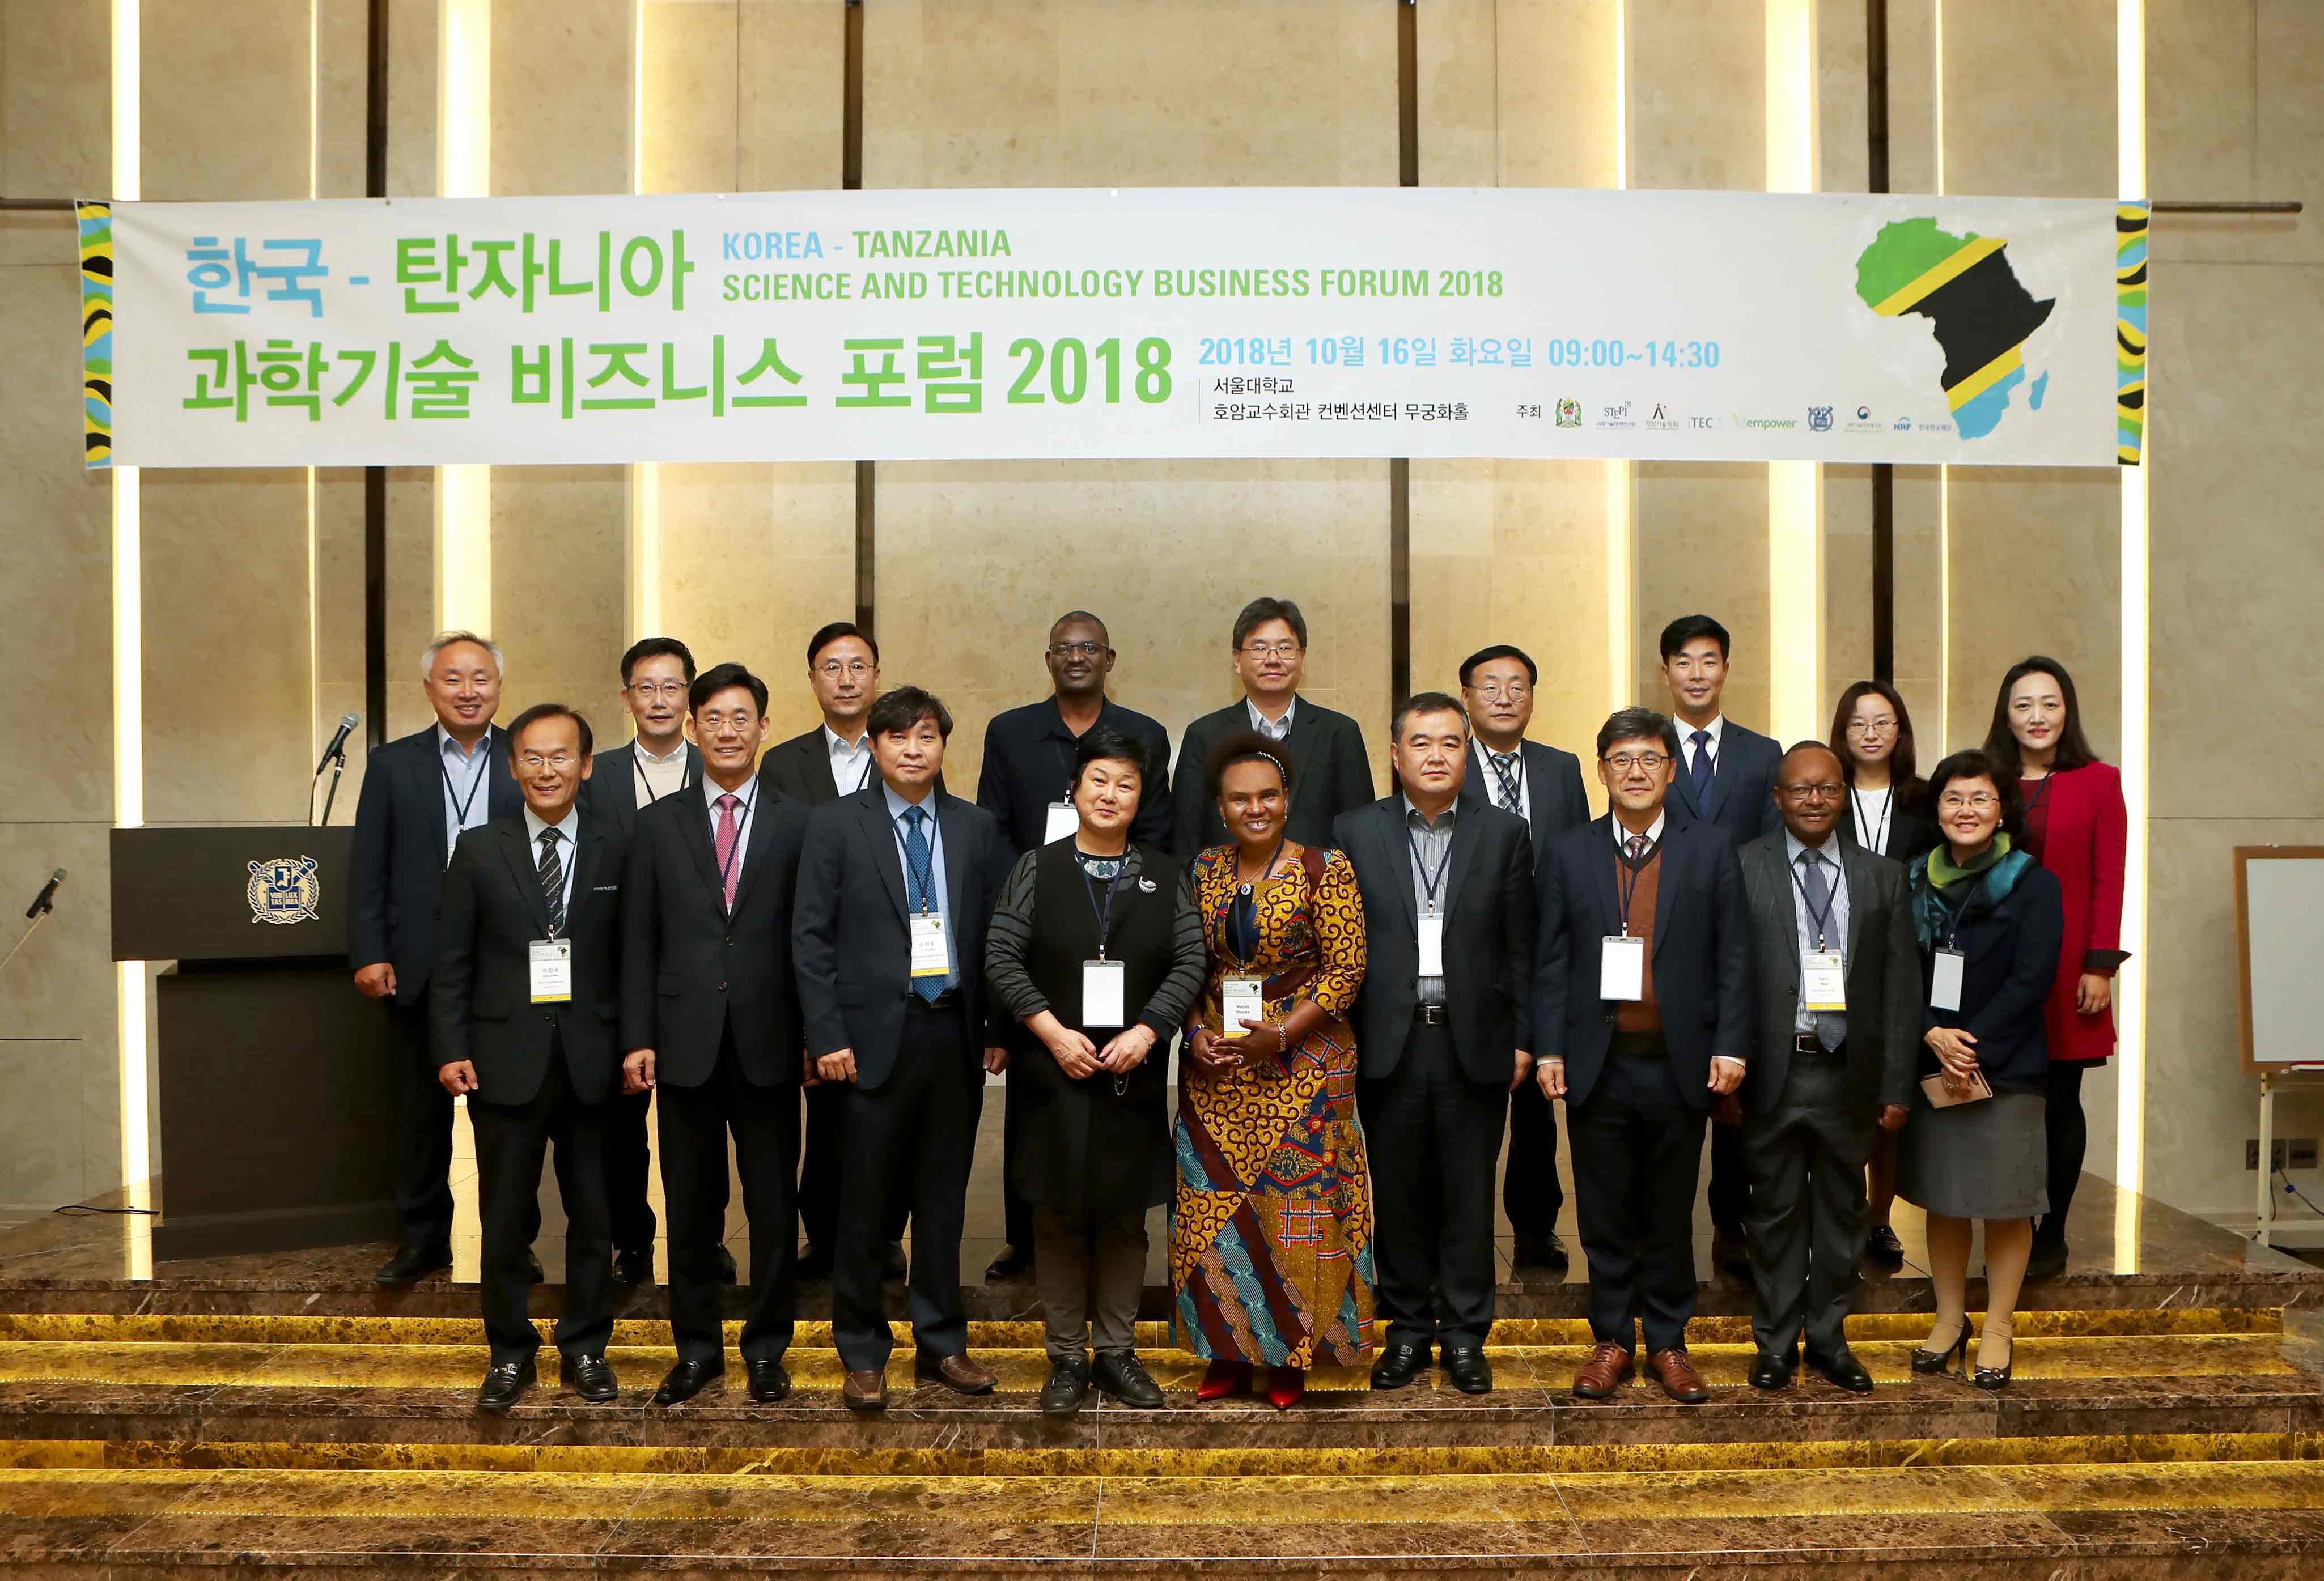 Korea-Tanzania Science and Technology Business Forum